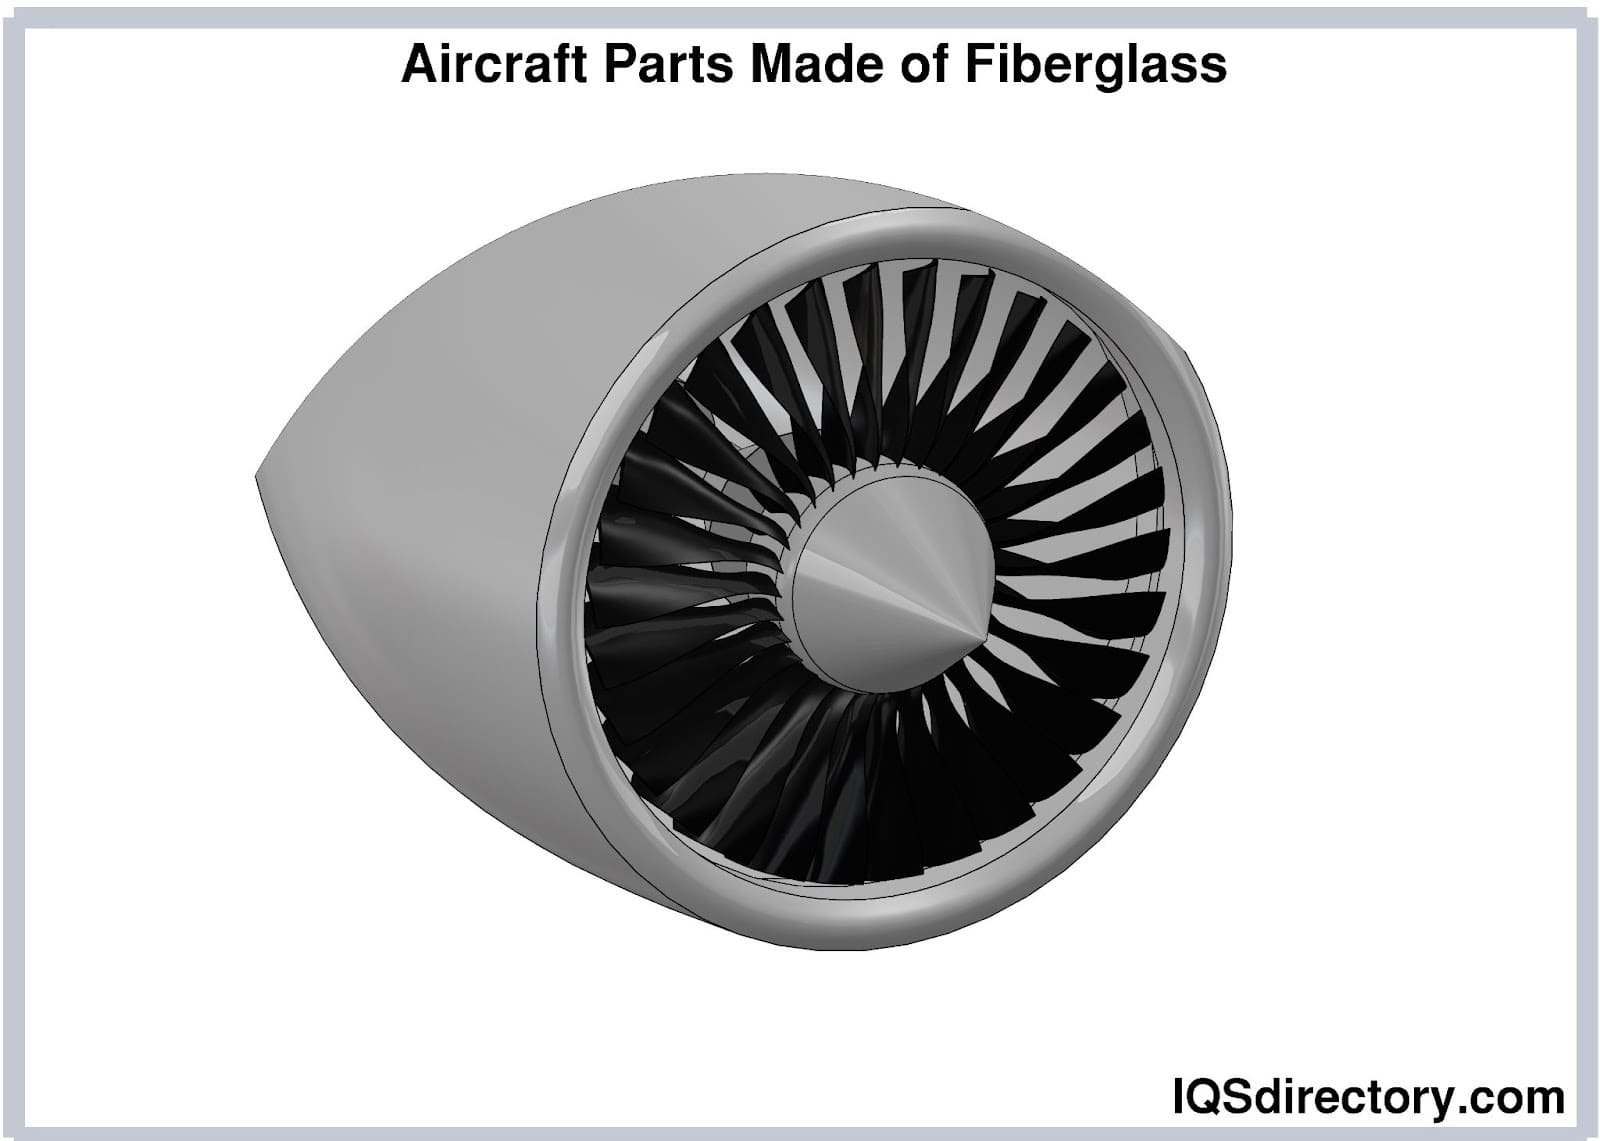 Aircraft Parts Made of Fiberglass